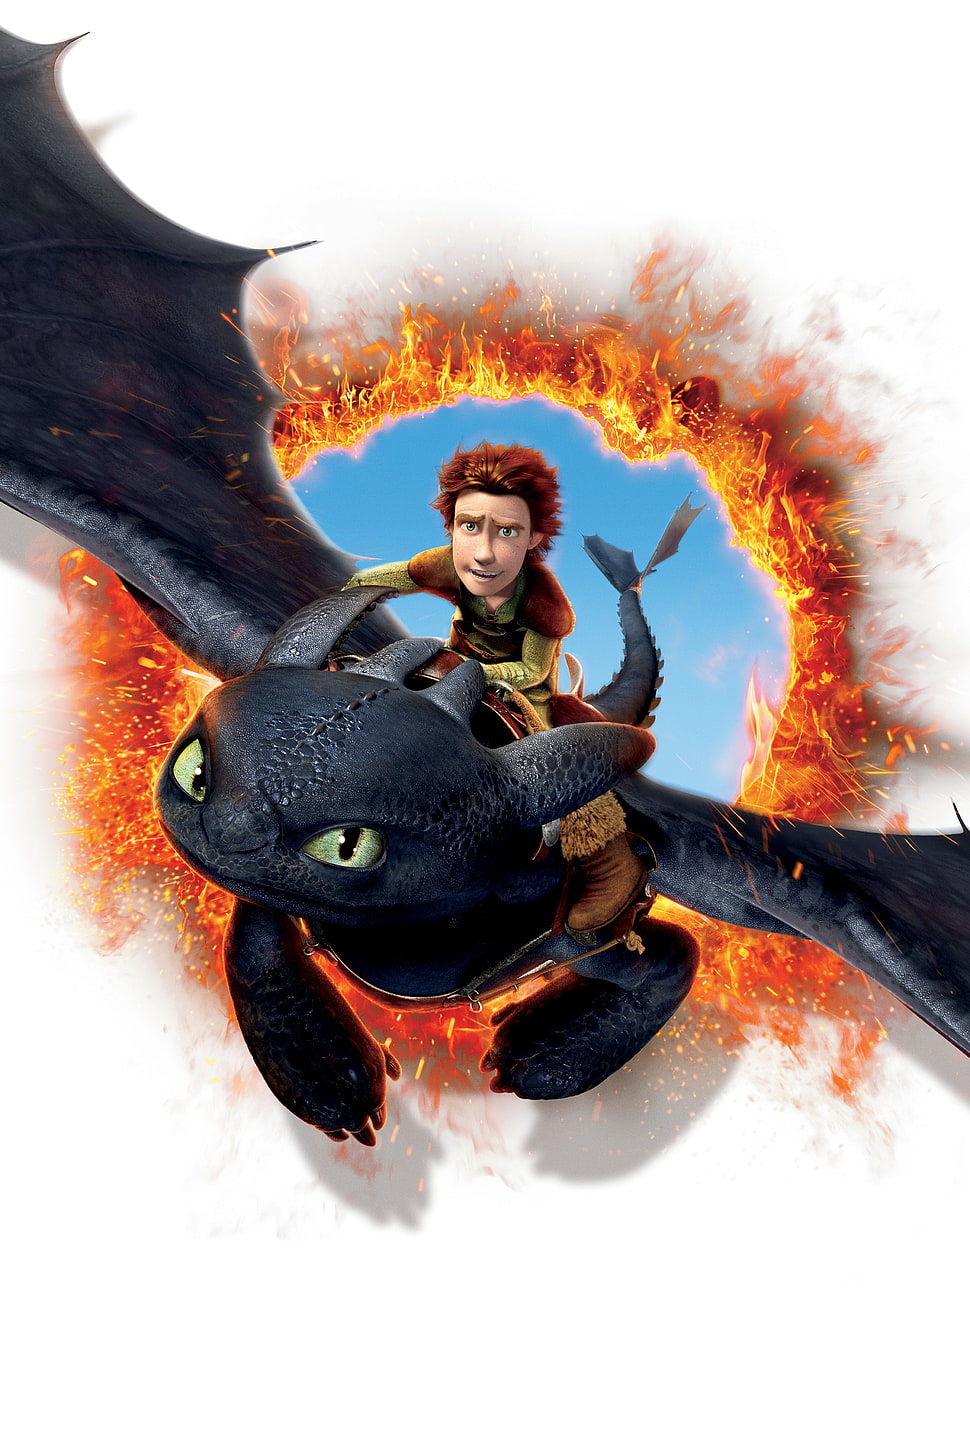 How To Train Your Dragon 2 digital wallpaper, dragon HD wallpaper